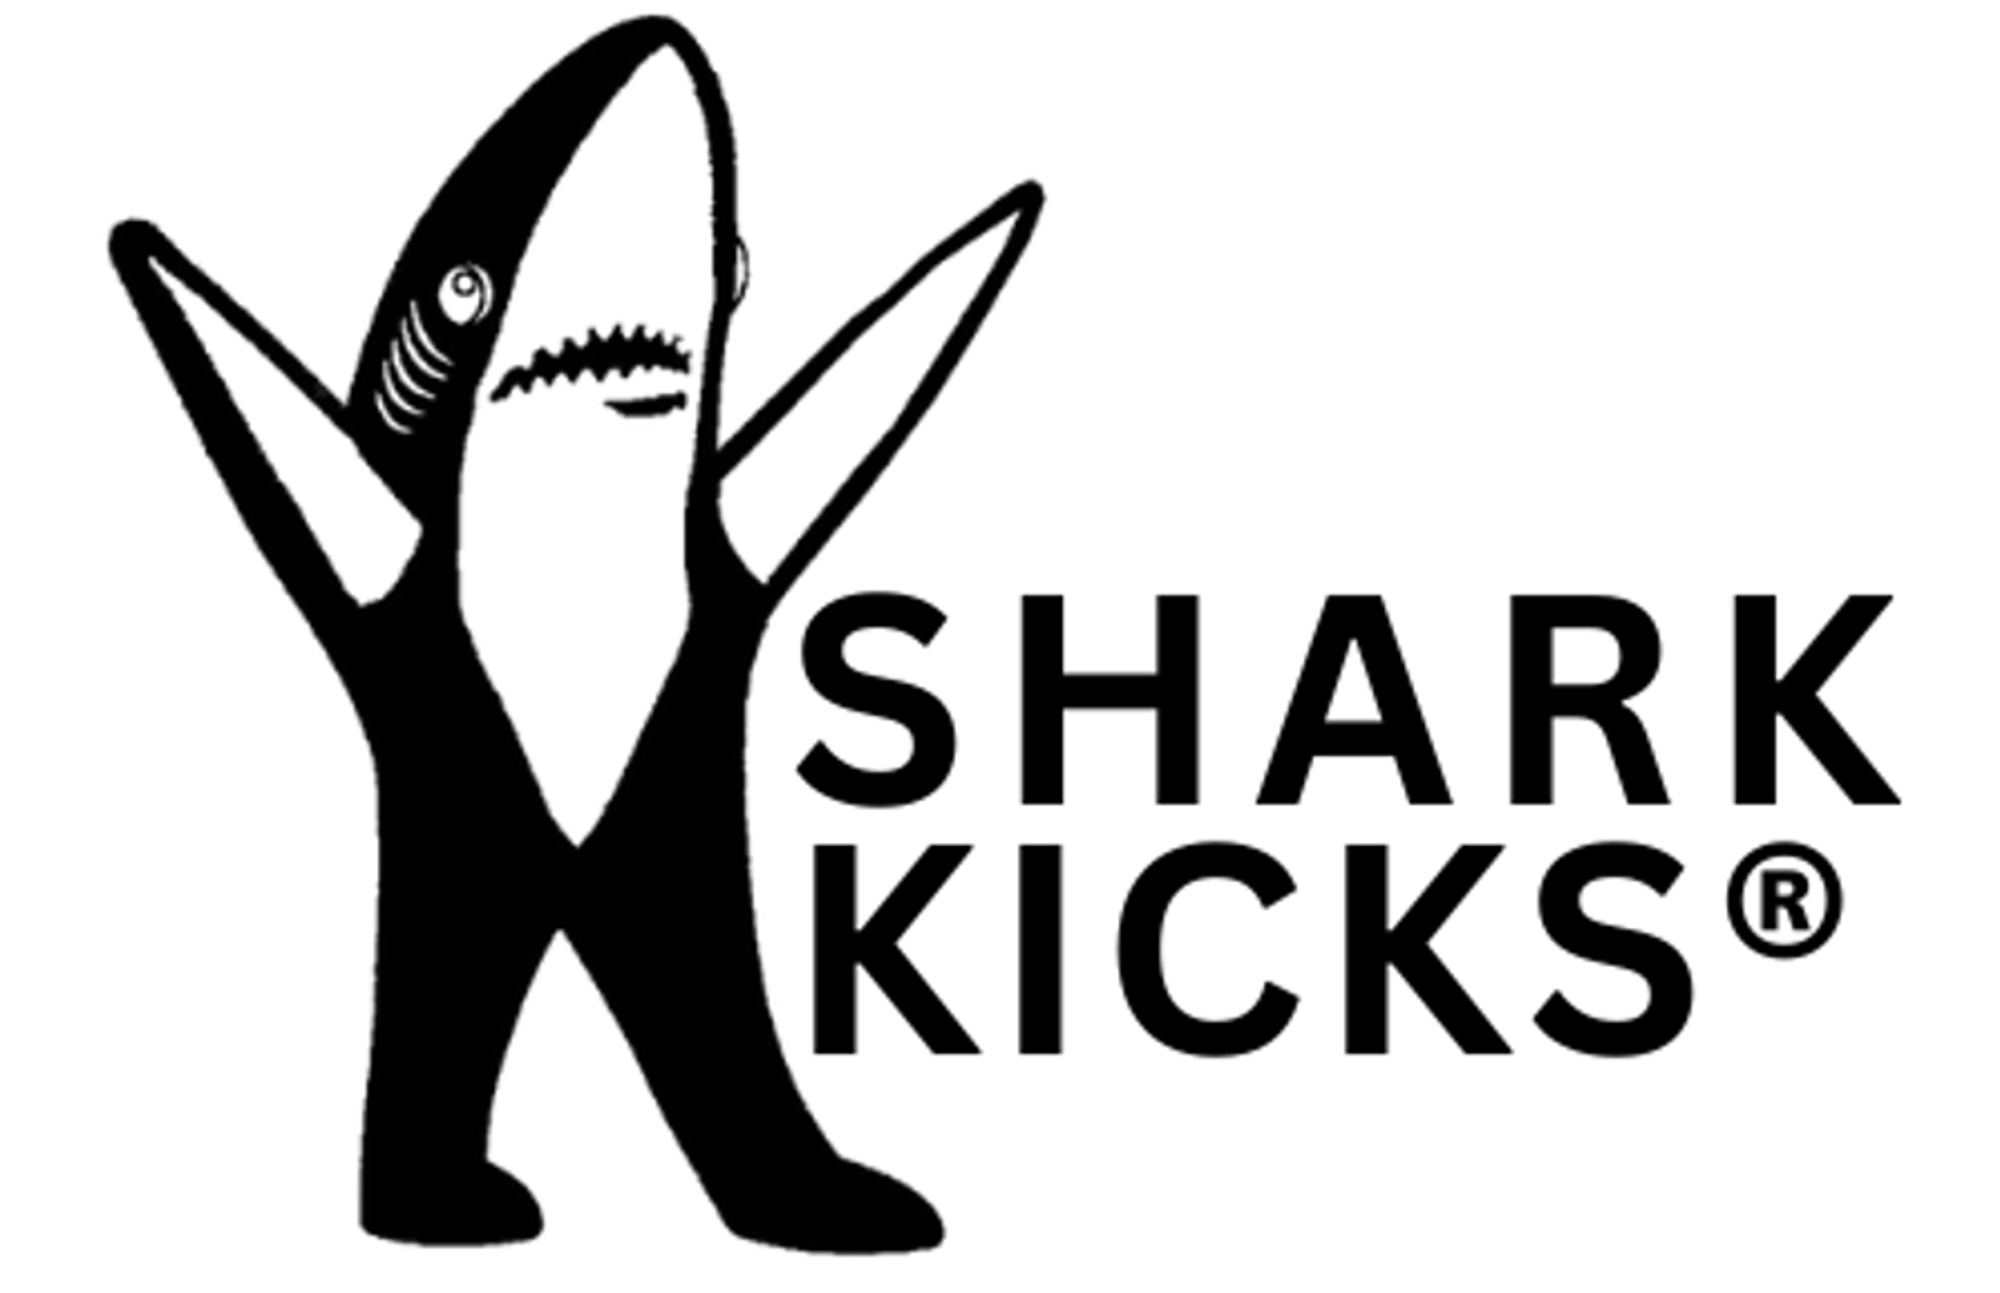 SHARK KICKS ®